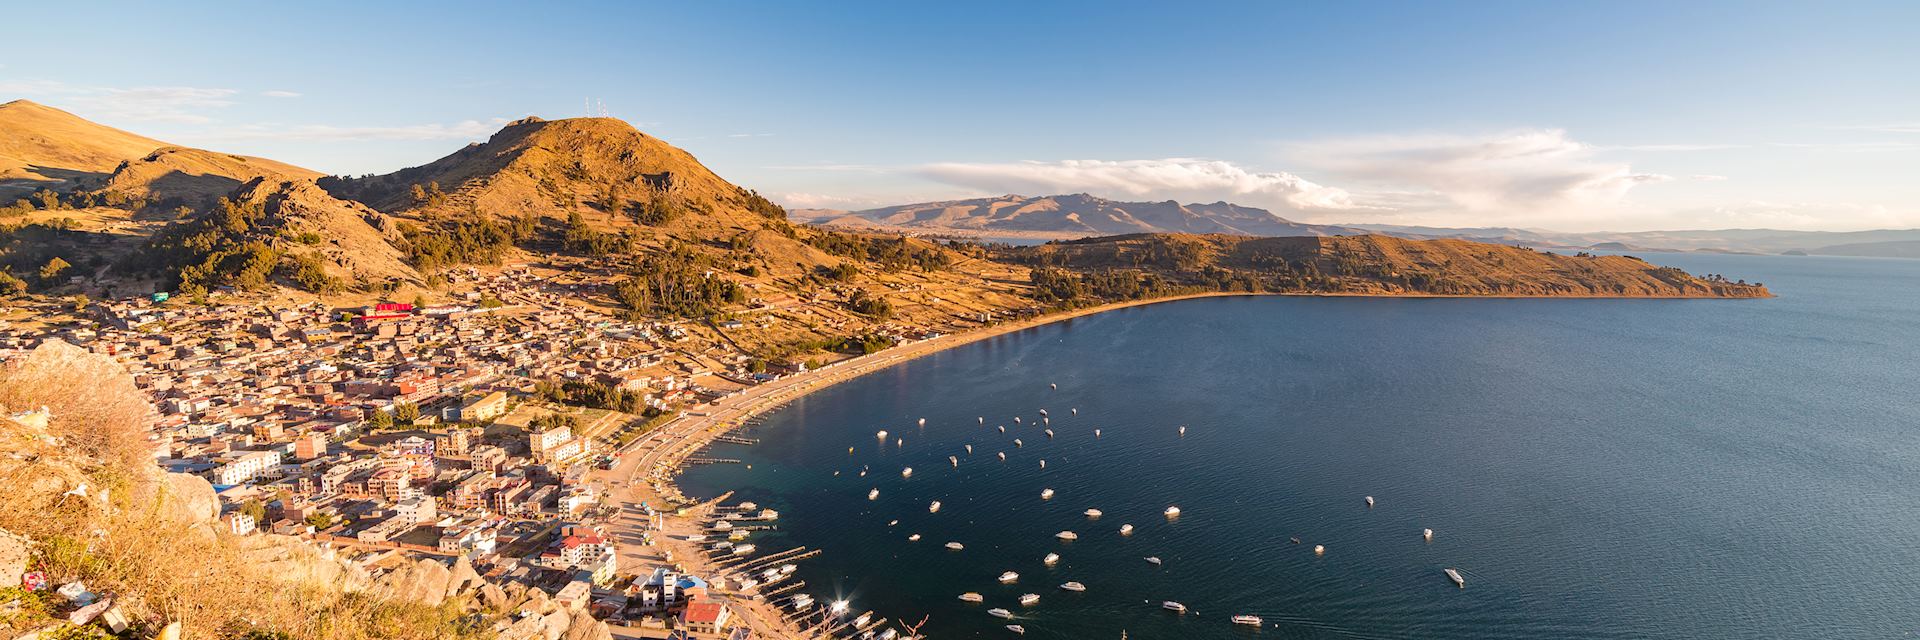 Sun Island, Lake Titicaca